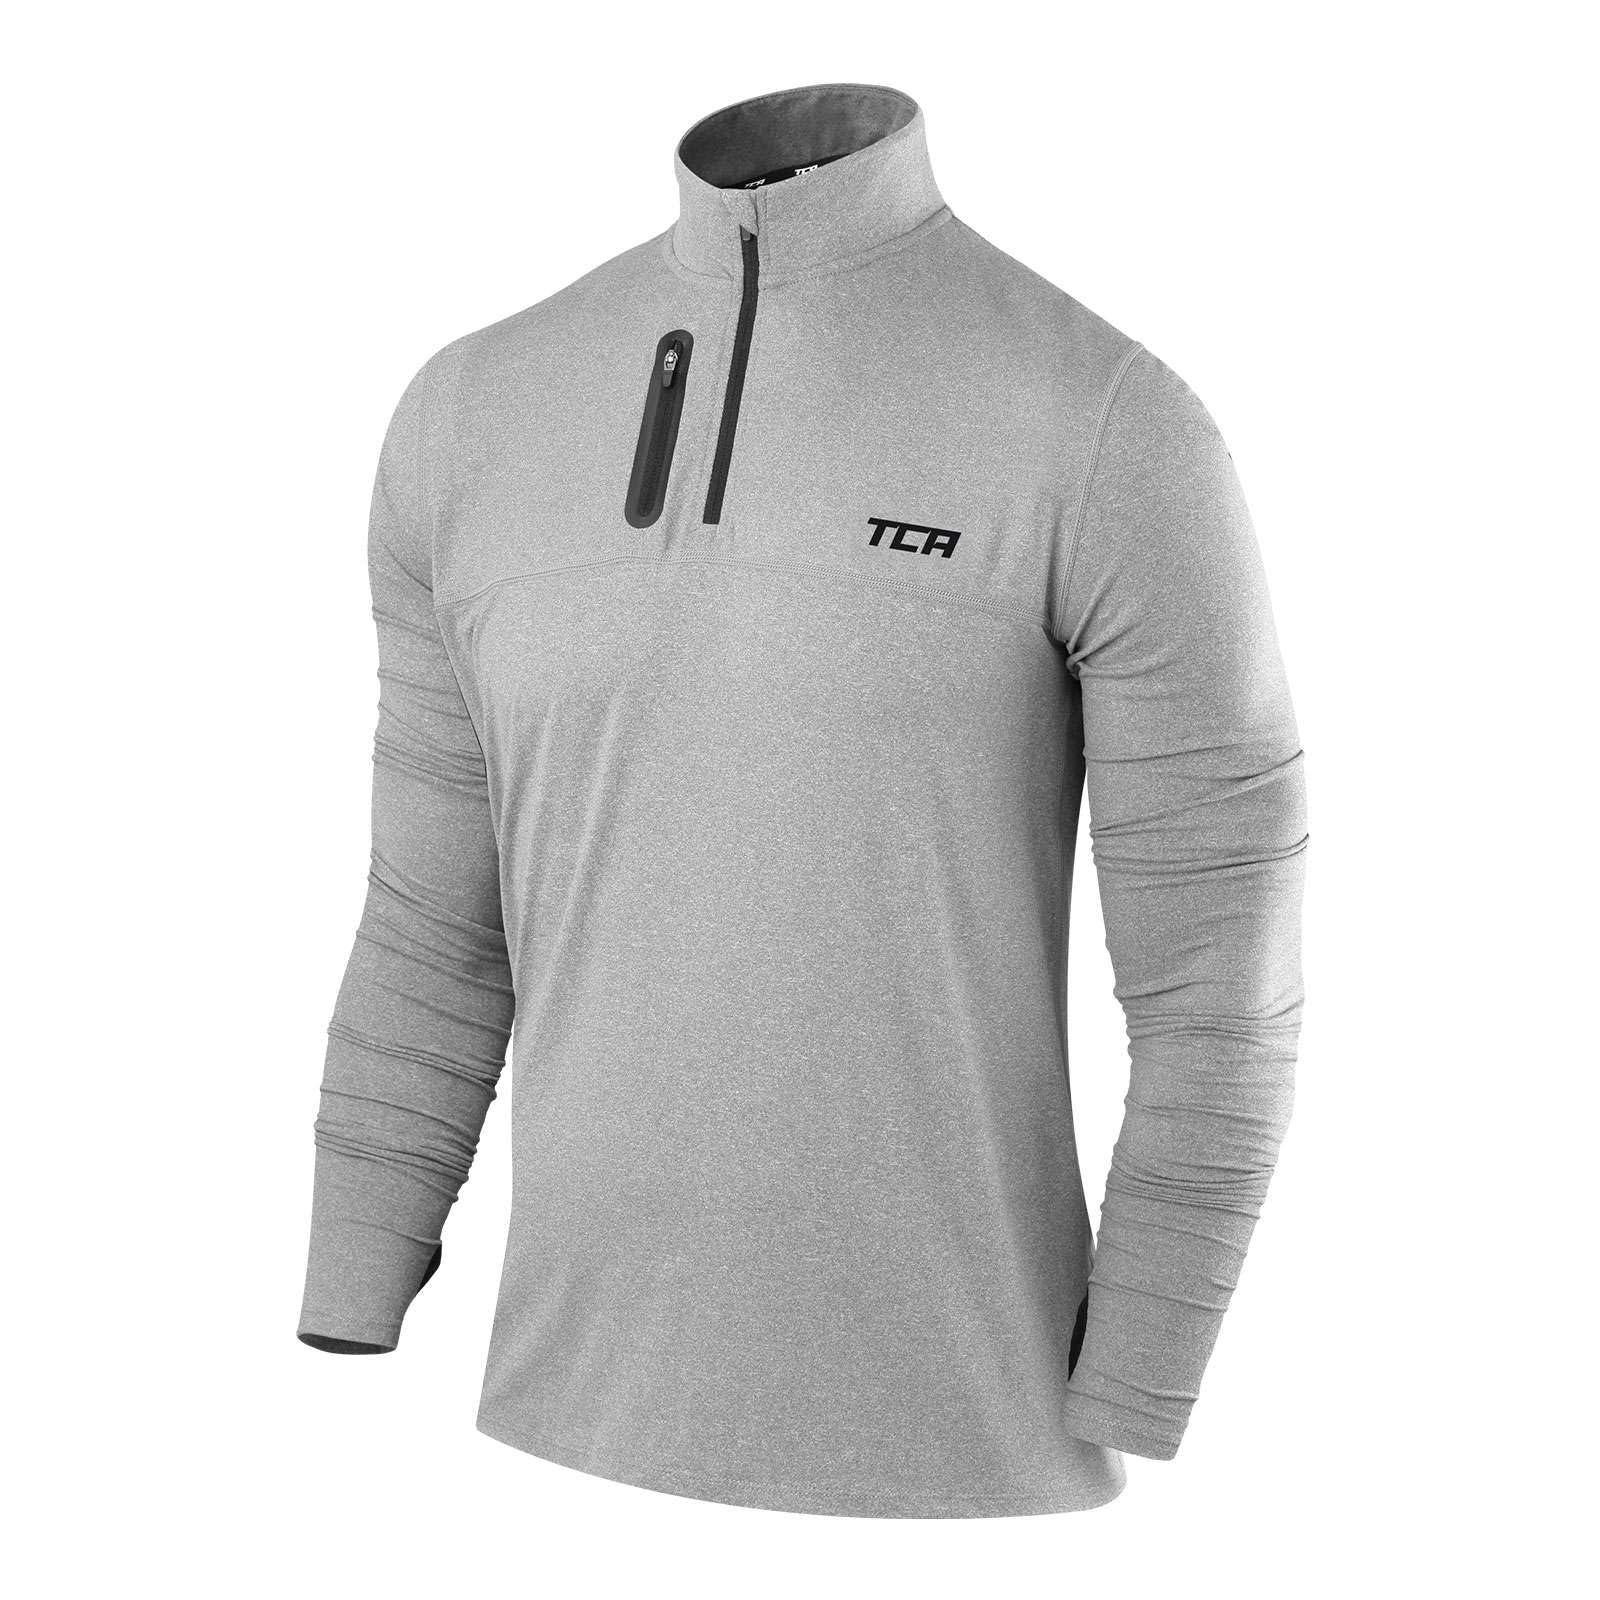 TCA Herren Fusion Pro Quickdry Langarm Lauf Shirt mit Halbem Reißverschluss - Grau/Grau, S